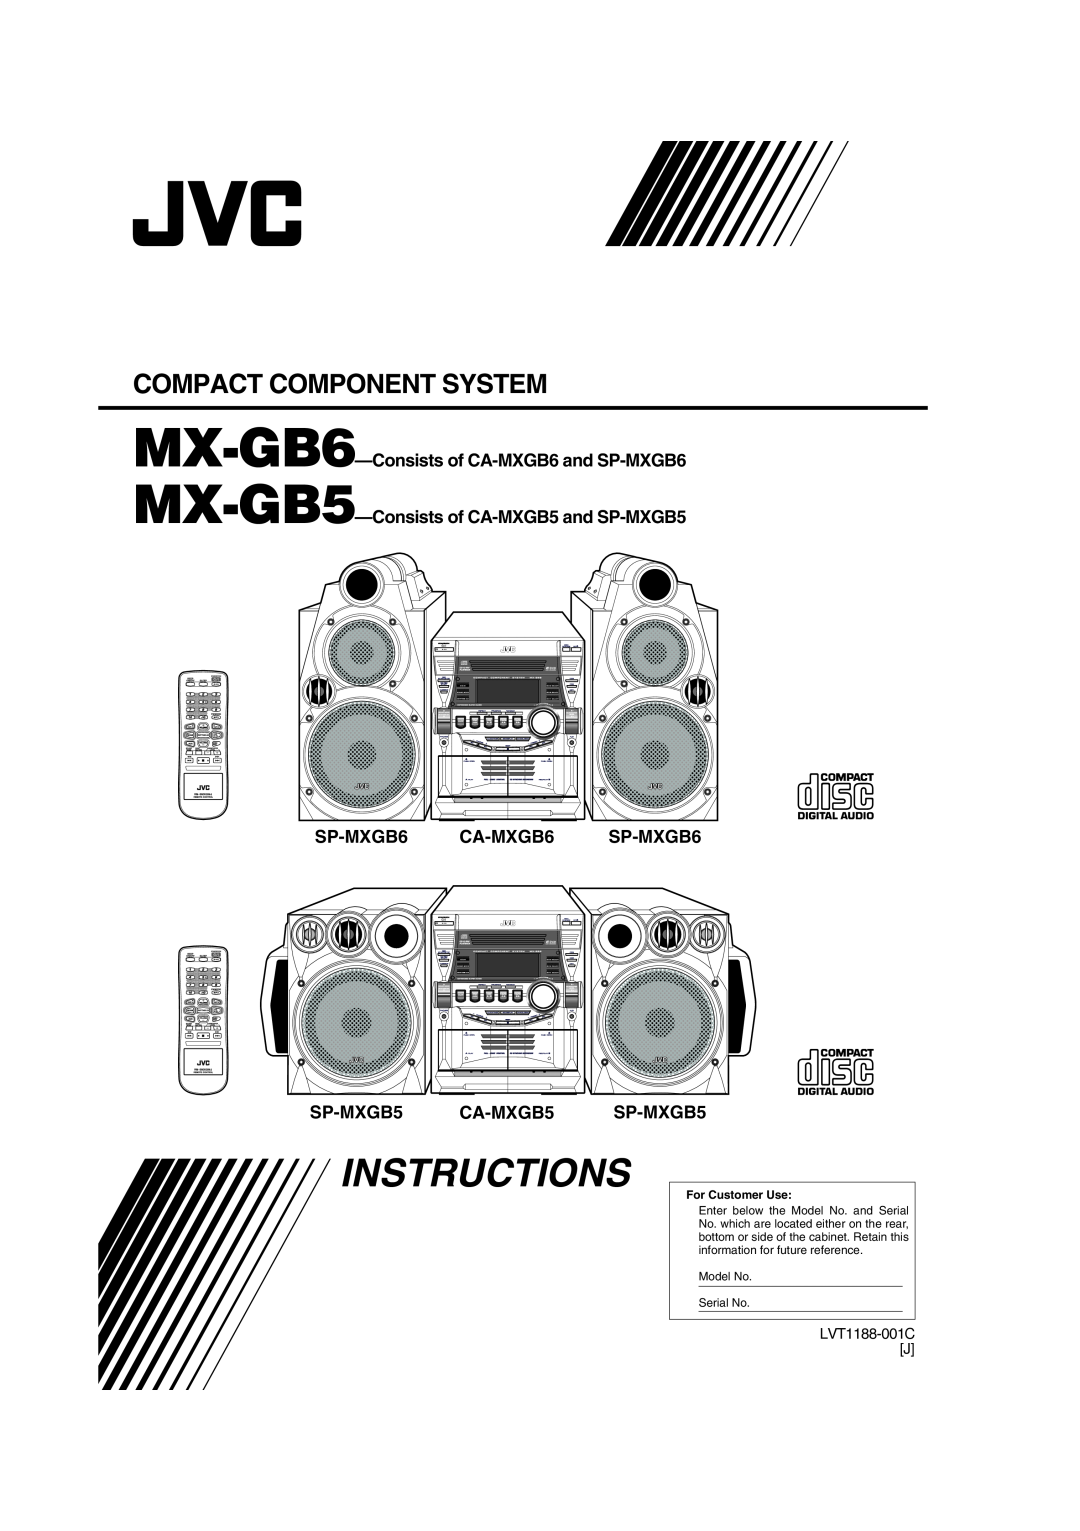 JVC MX-GB5C manual Instructions, Compact Component System, MX-GB6-Consistsof CA-MXGB6and SP-MXGB6, LVT1188-001CJ 